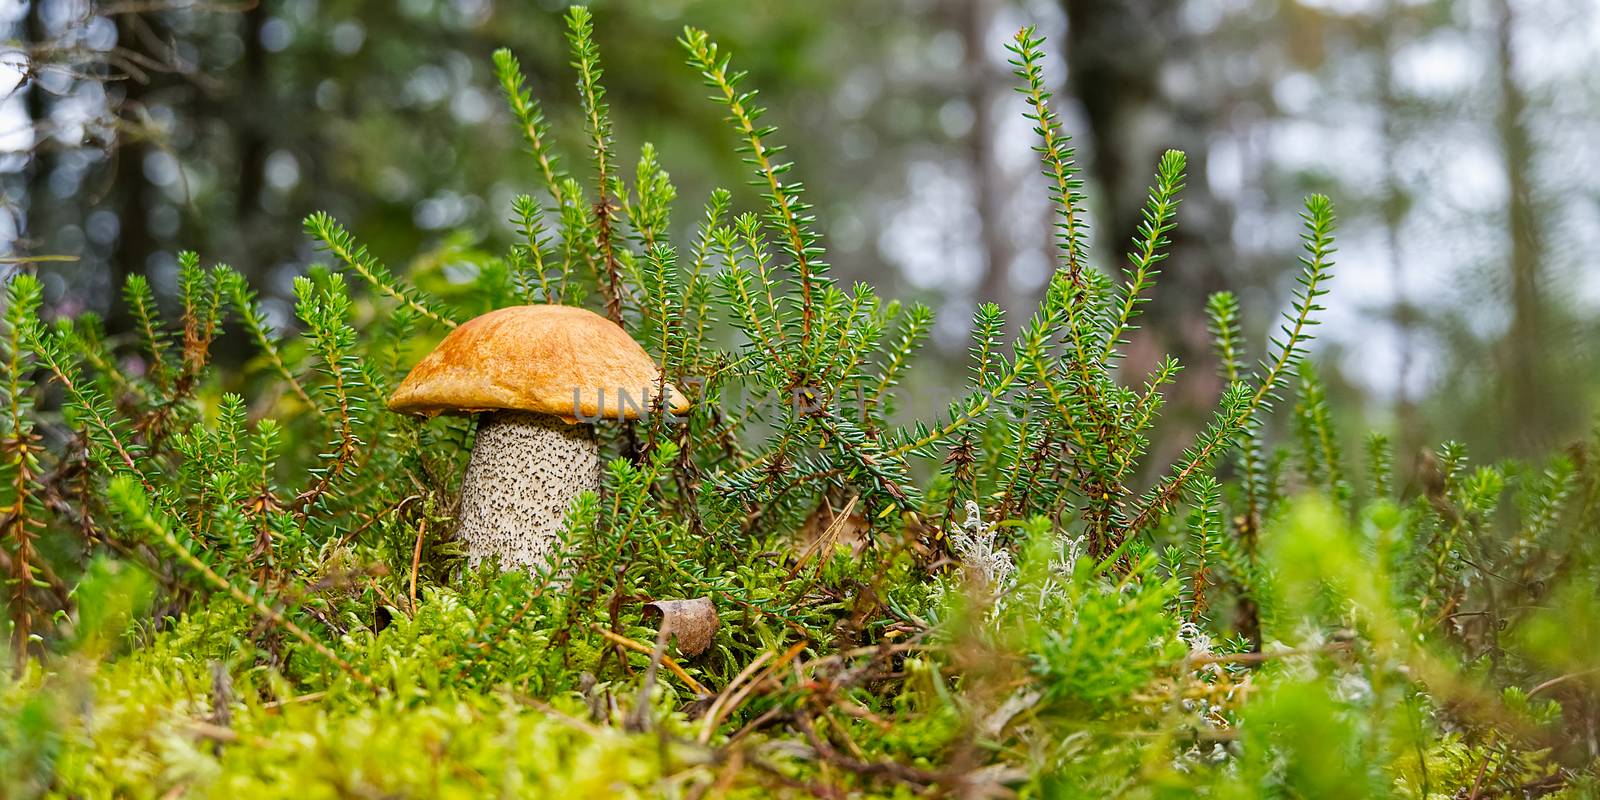 Edible orange-cap mushroom growing in green moss. Leccinum aurantiacum Harvesting mushrooms in forest. edible mushrooms in northern forests of europe. by PhotoTime